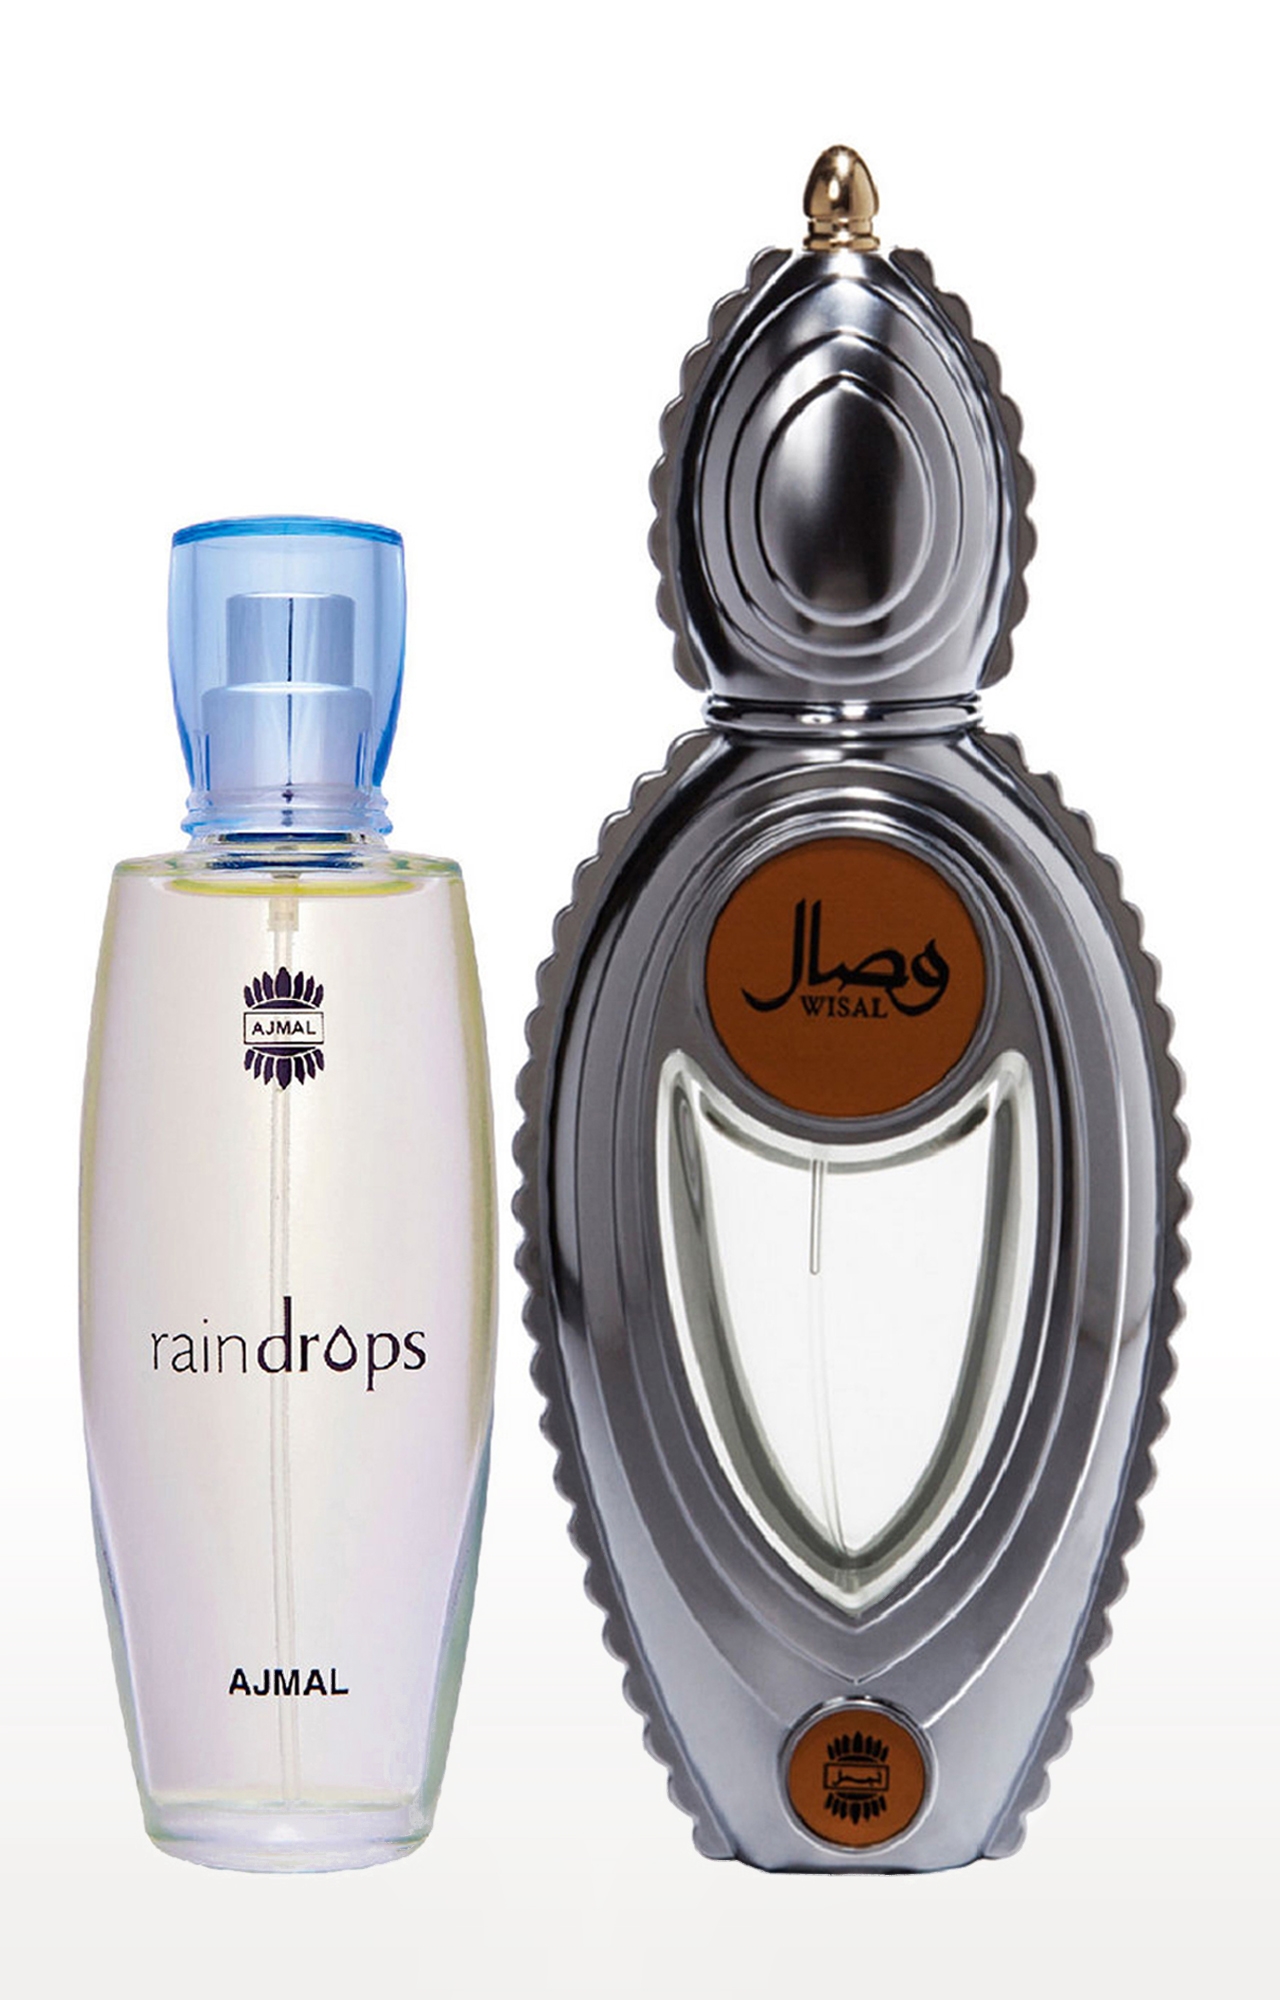 Ajmal | Ajmal Raindrops EDP Perfume 50ml for Women and Wisal EDP Musky Perfume 50ml for Women